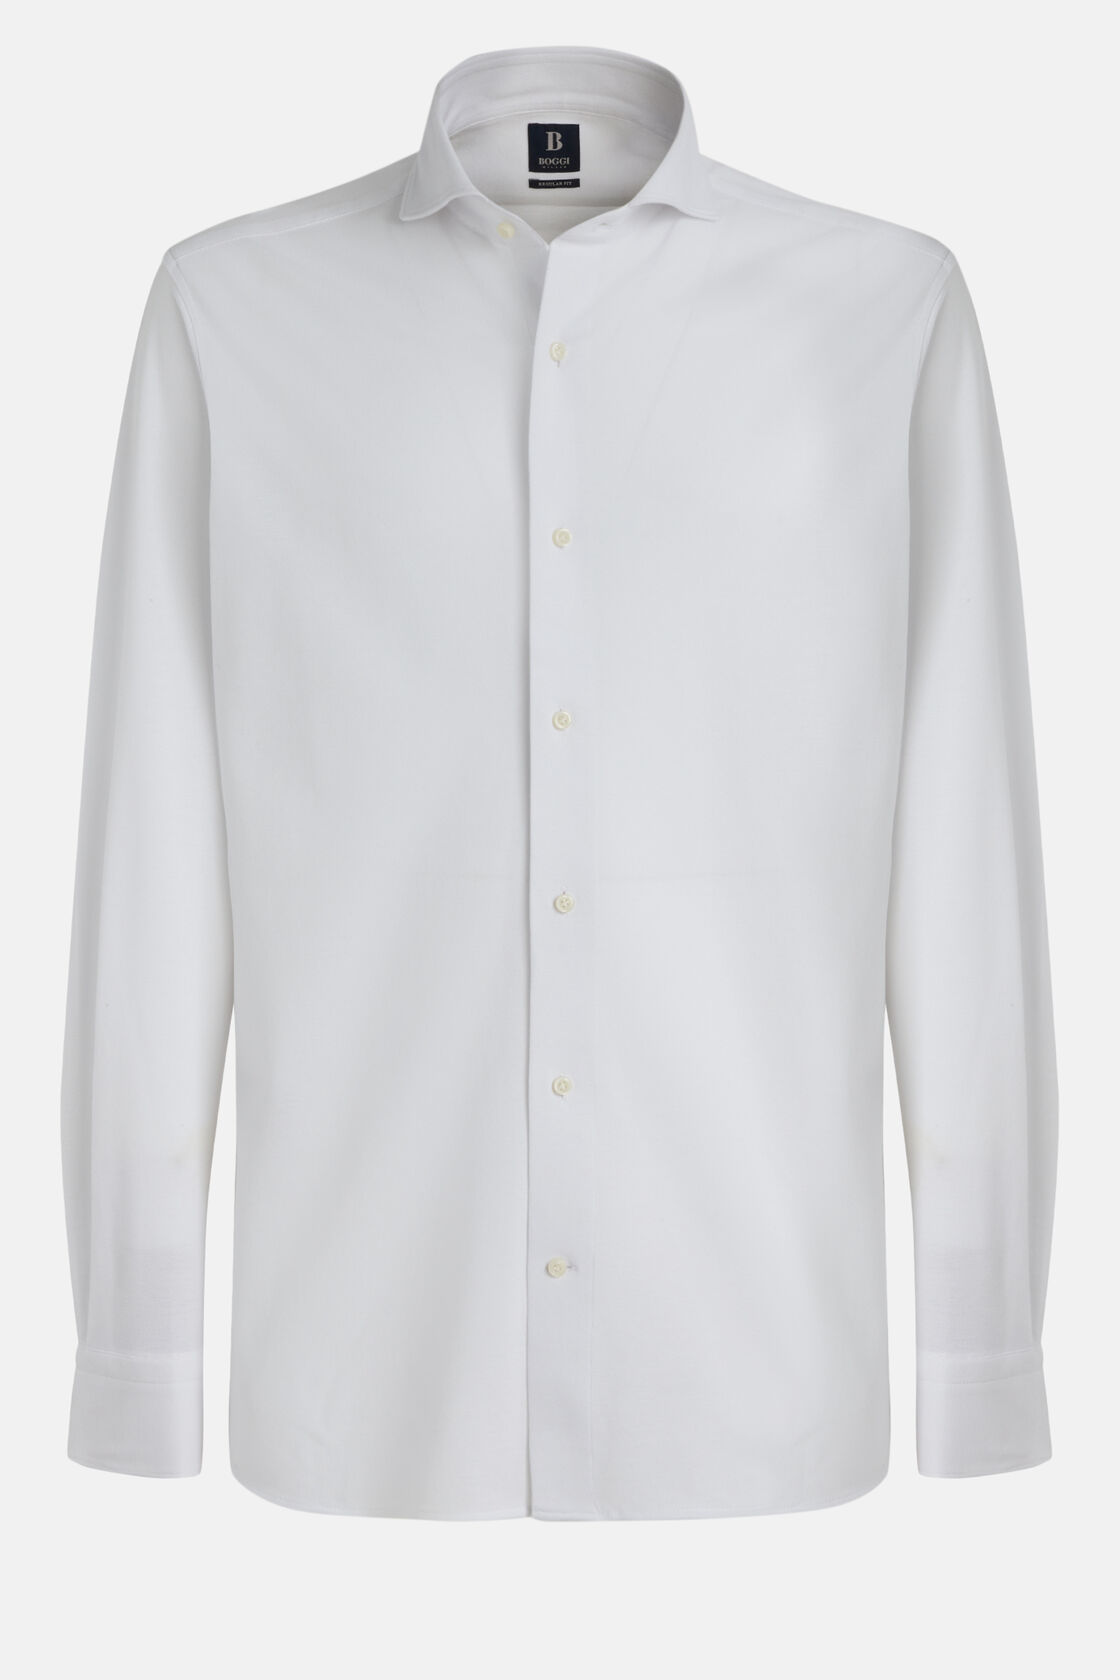 Polo shirt in piquet white cotton regular fit, White, hi-res